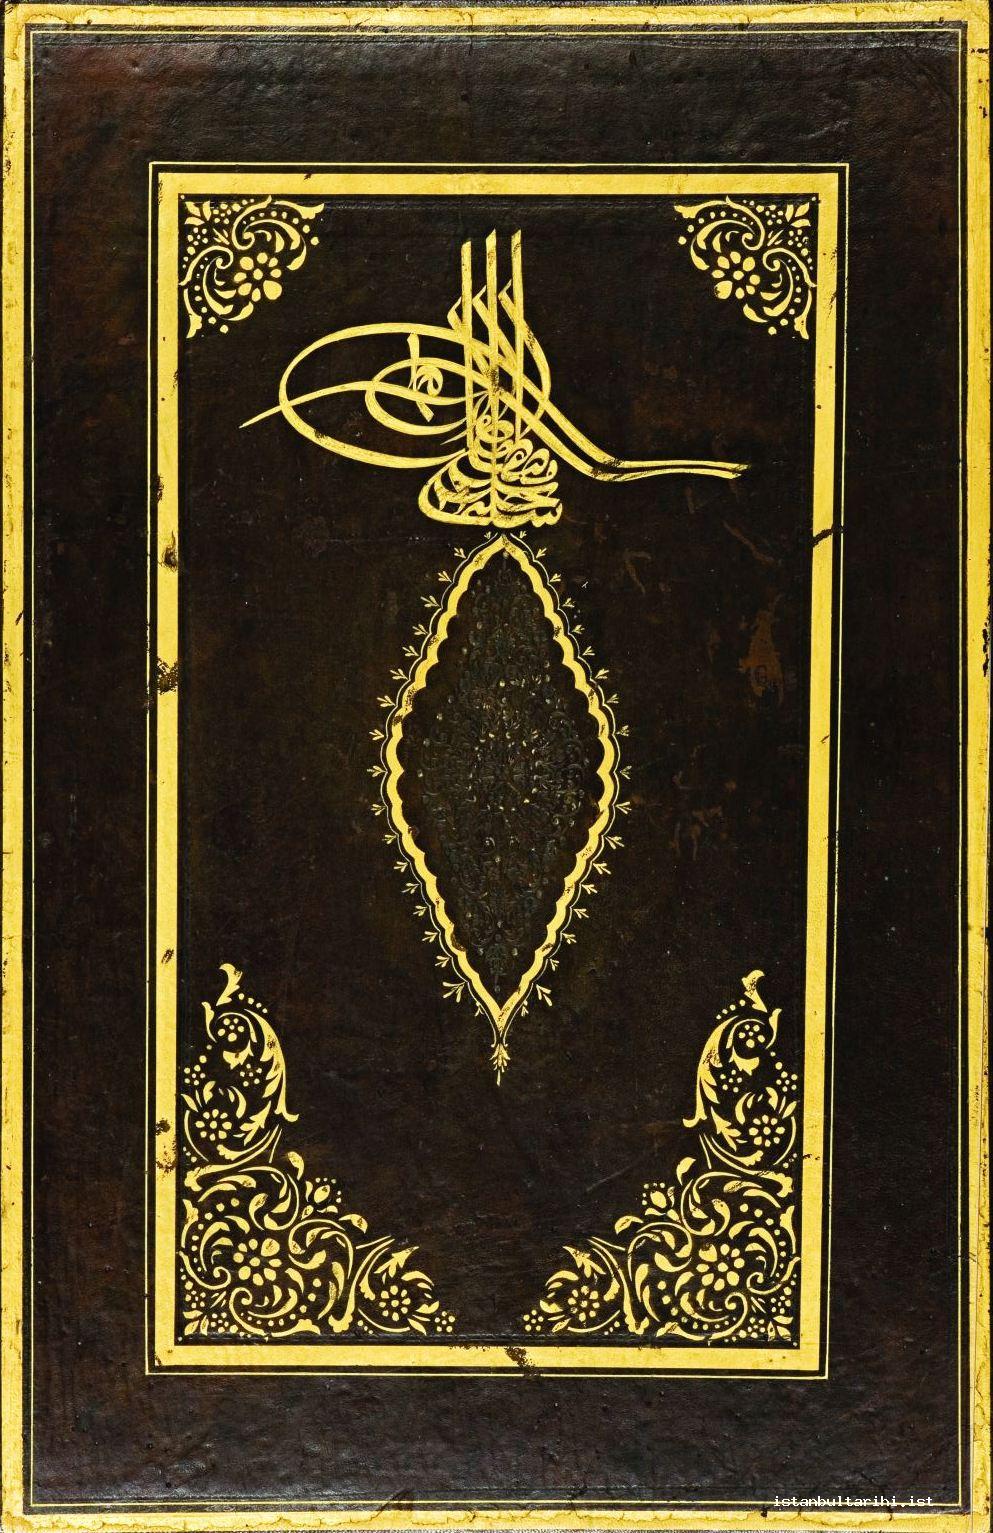 7- The binding cover of <em>Atlas-ı Kebir Tercemesi</em> published by Üsküdar Publishing House